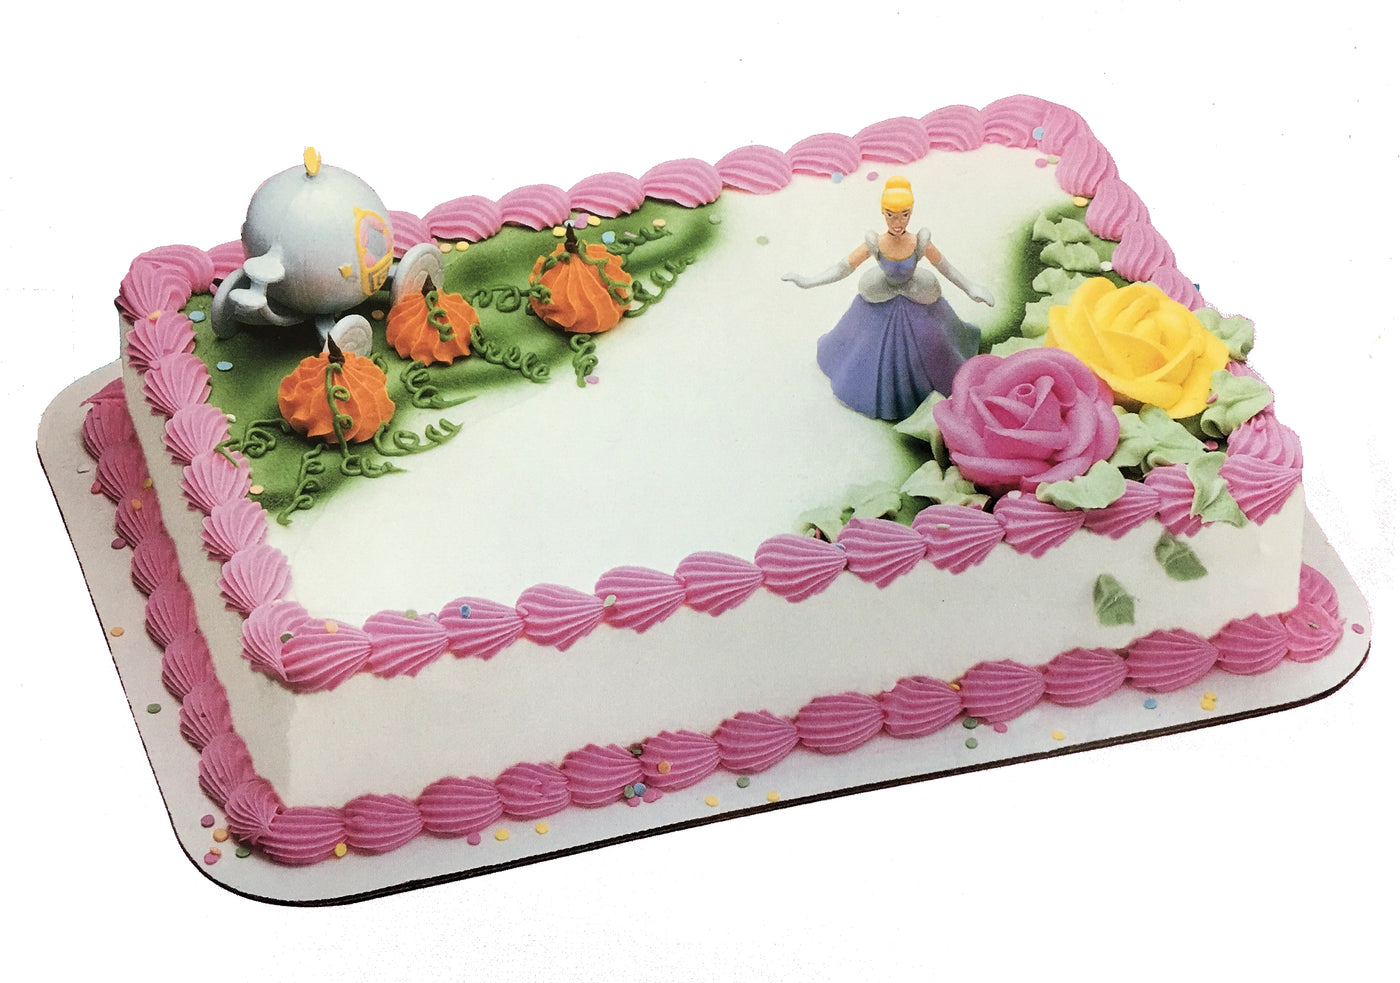 4 pc Disney Princess CAKE TOPPER Snow White Cinderella Belle Aurora 4  Figure Set Birthday Party